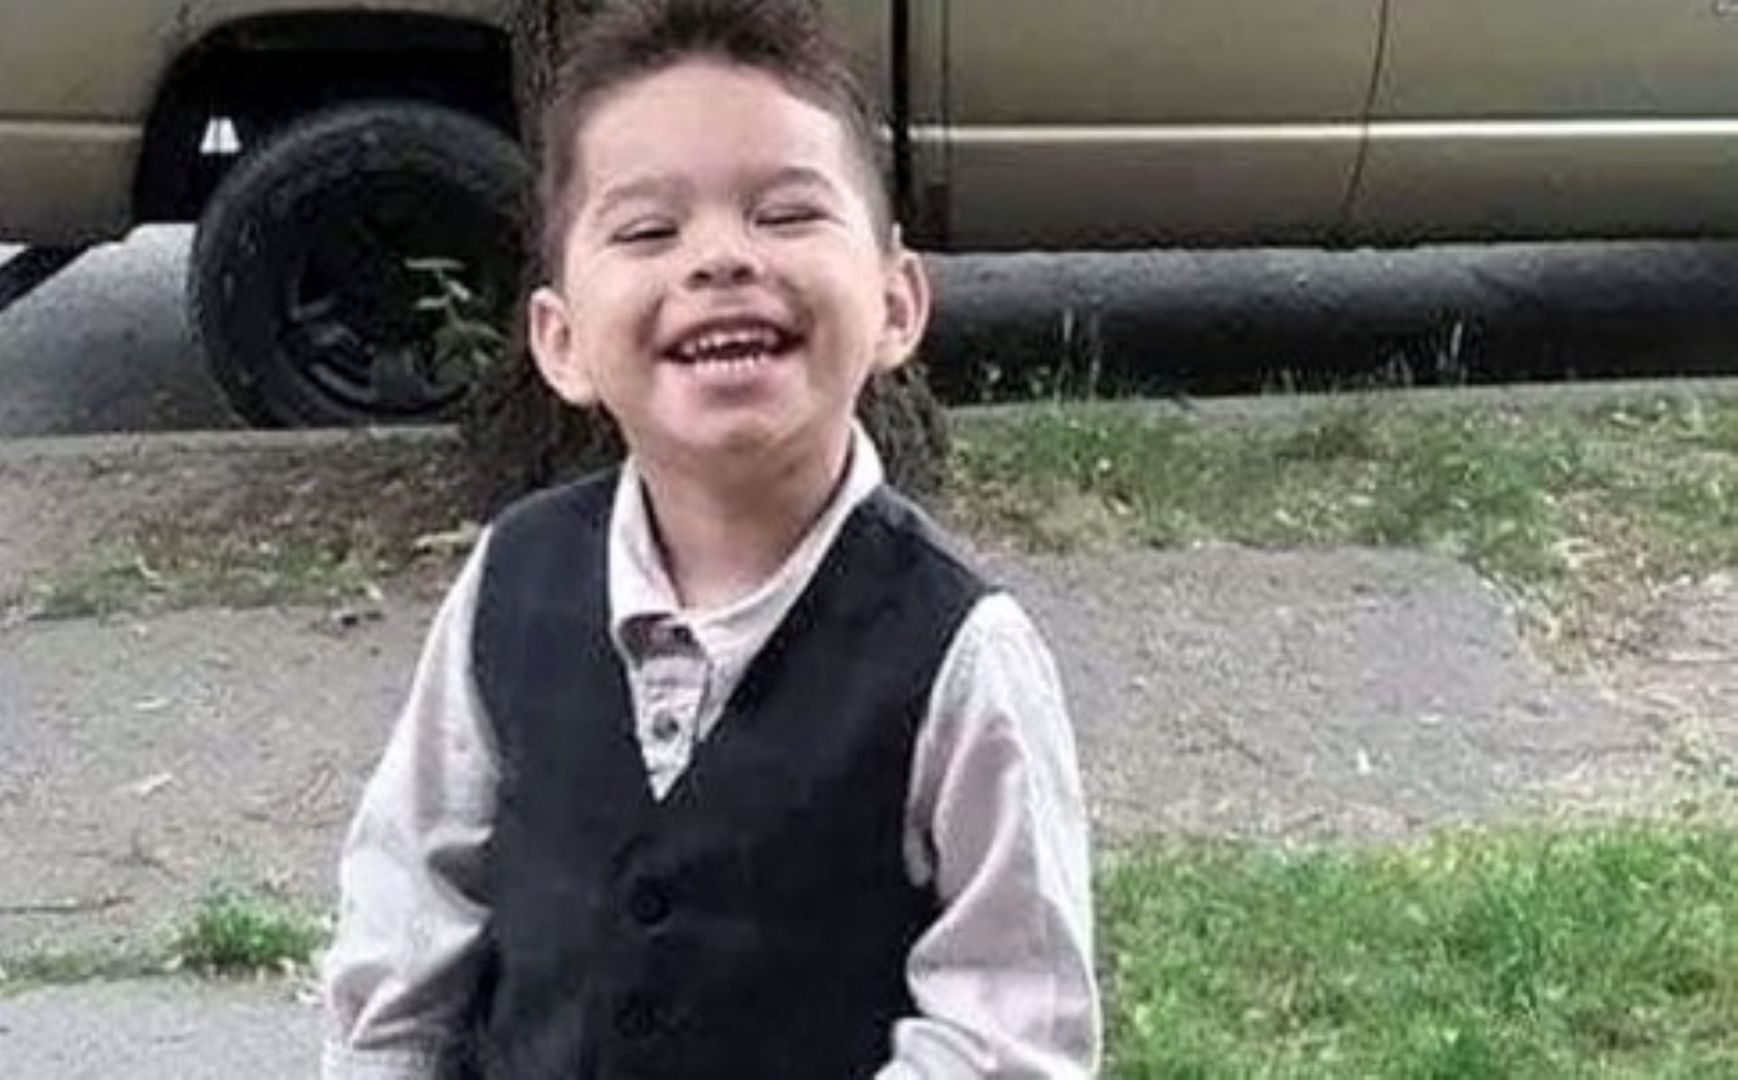 lawsuit-filed-against-newburgh-schools-in-death-of-7-year-old-boy